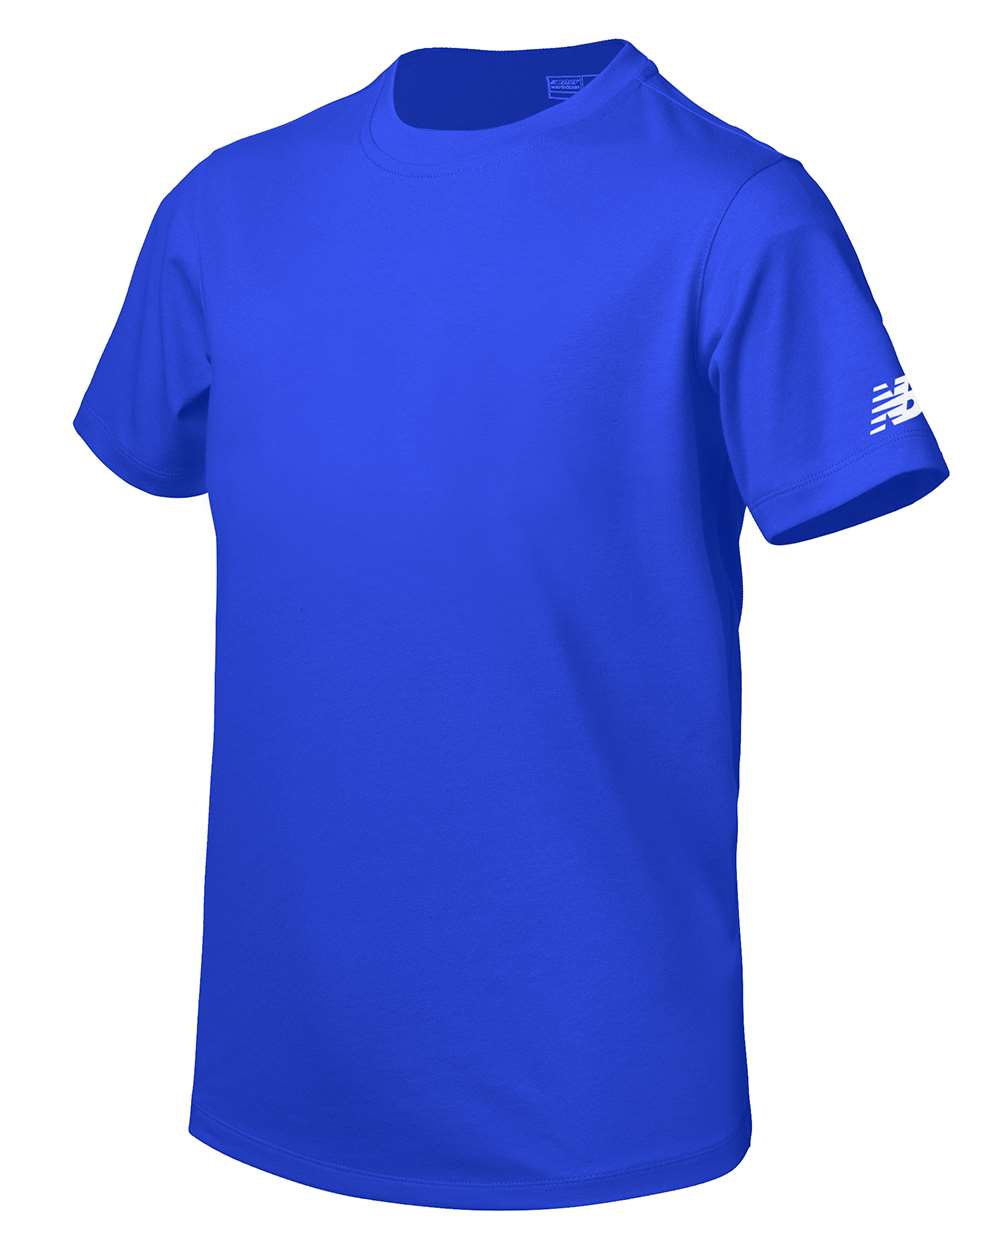 New Balance Youth Performance T-Shirt #YB81004P Royal Blue